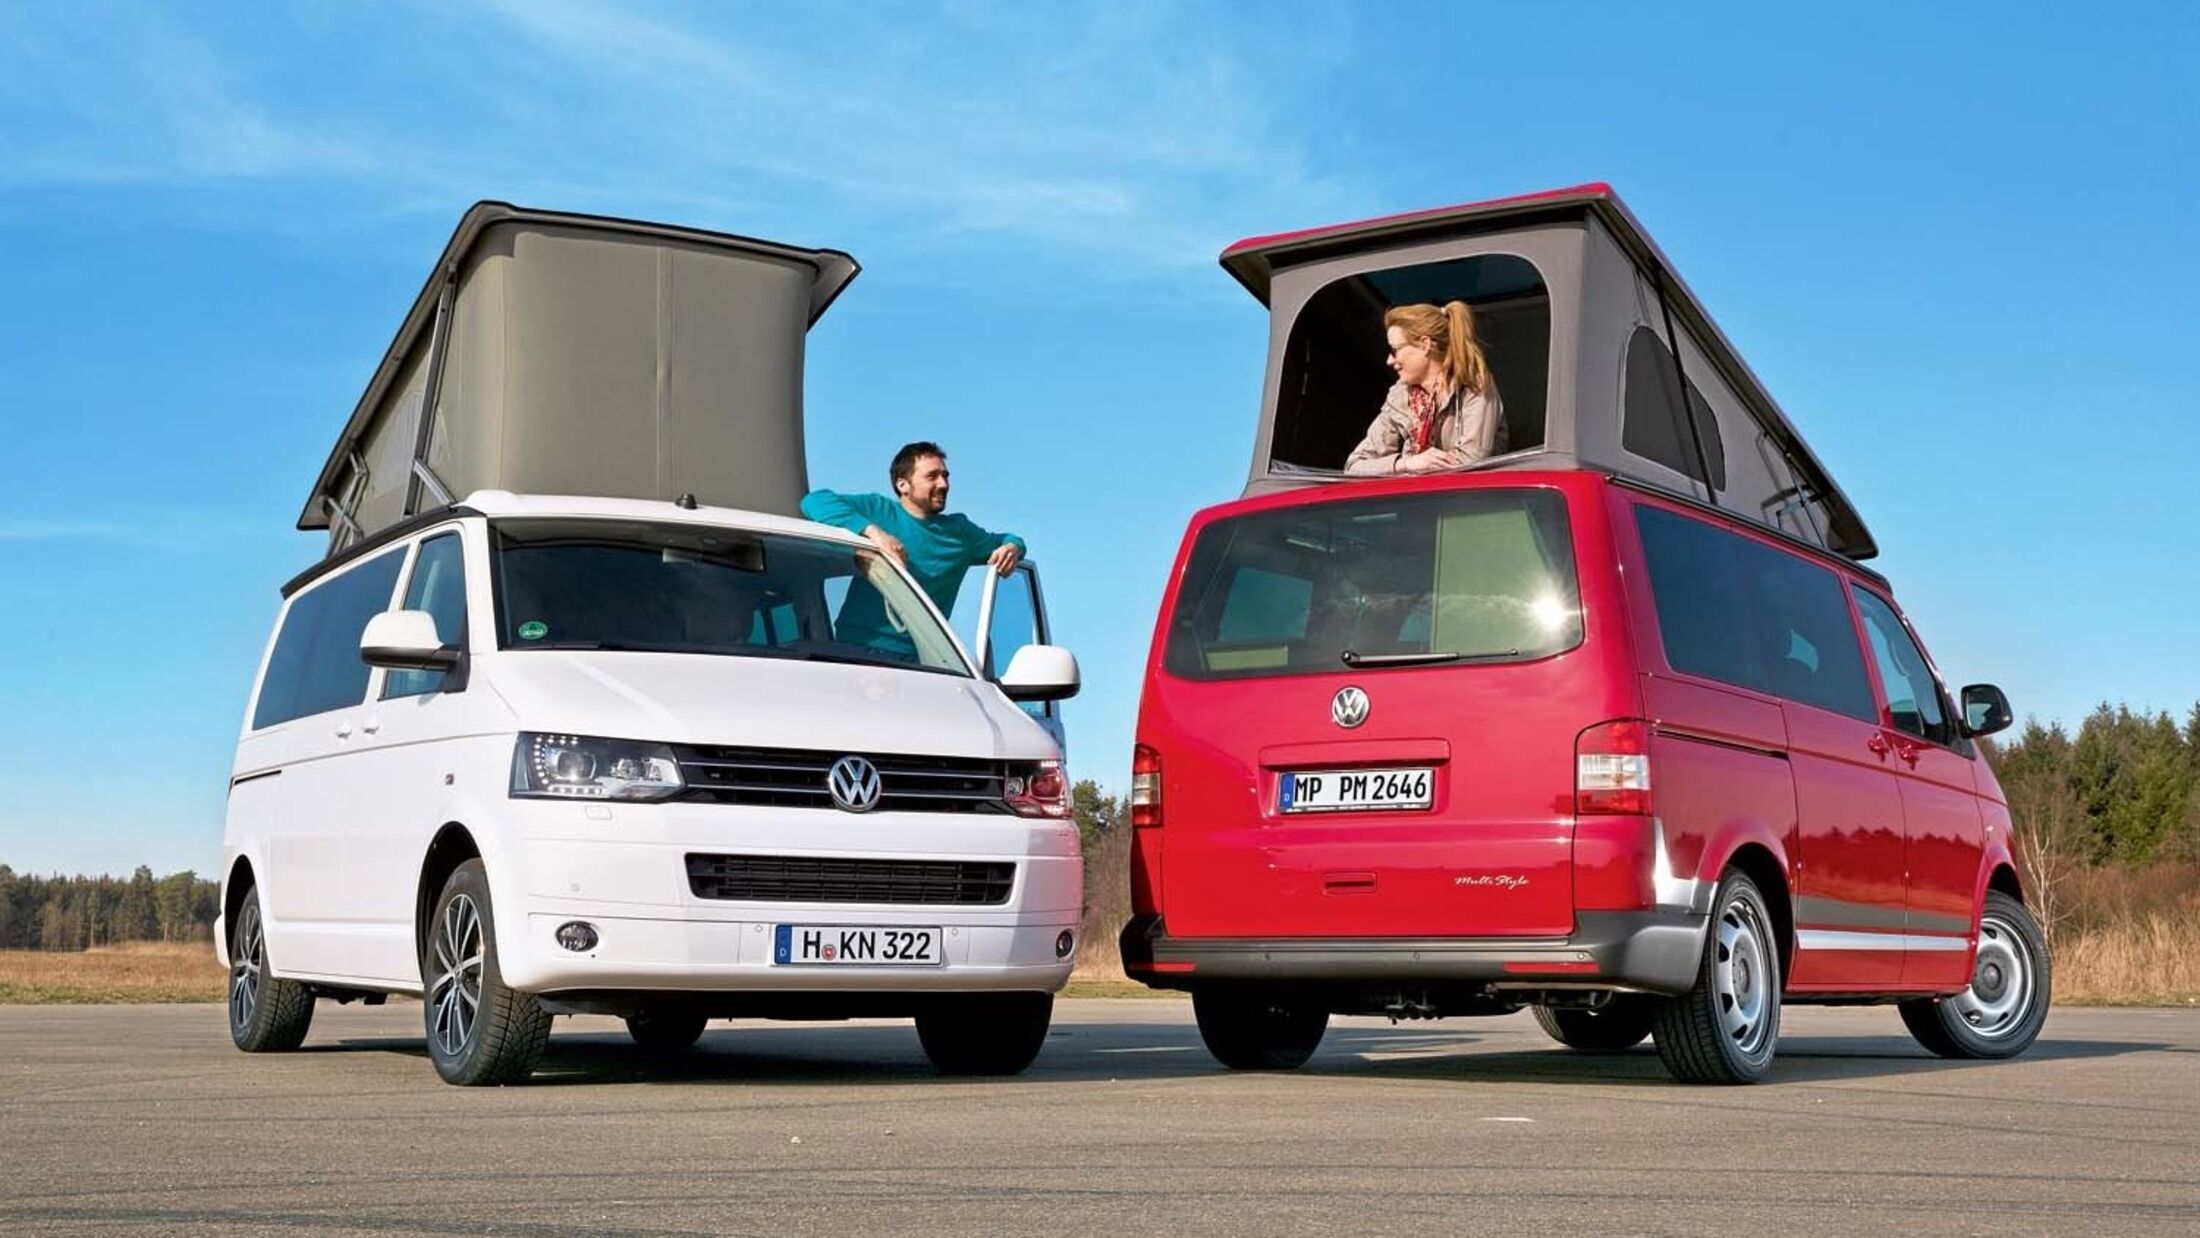 Campingbus-Vergleichstest: Reimo Multi Style gegen VW California